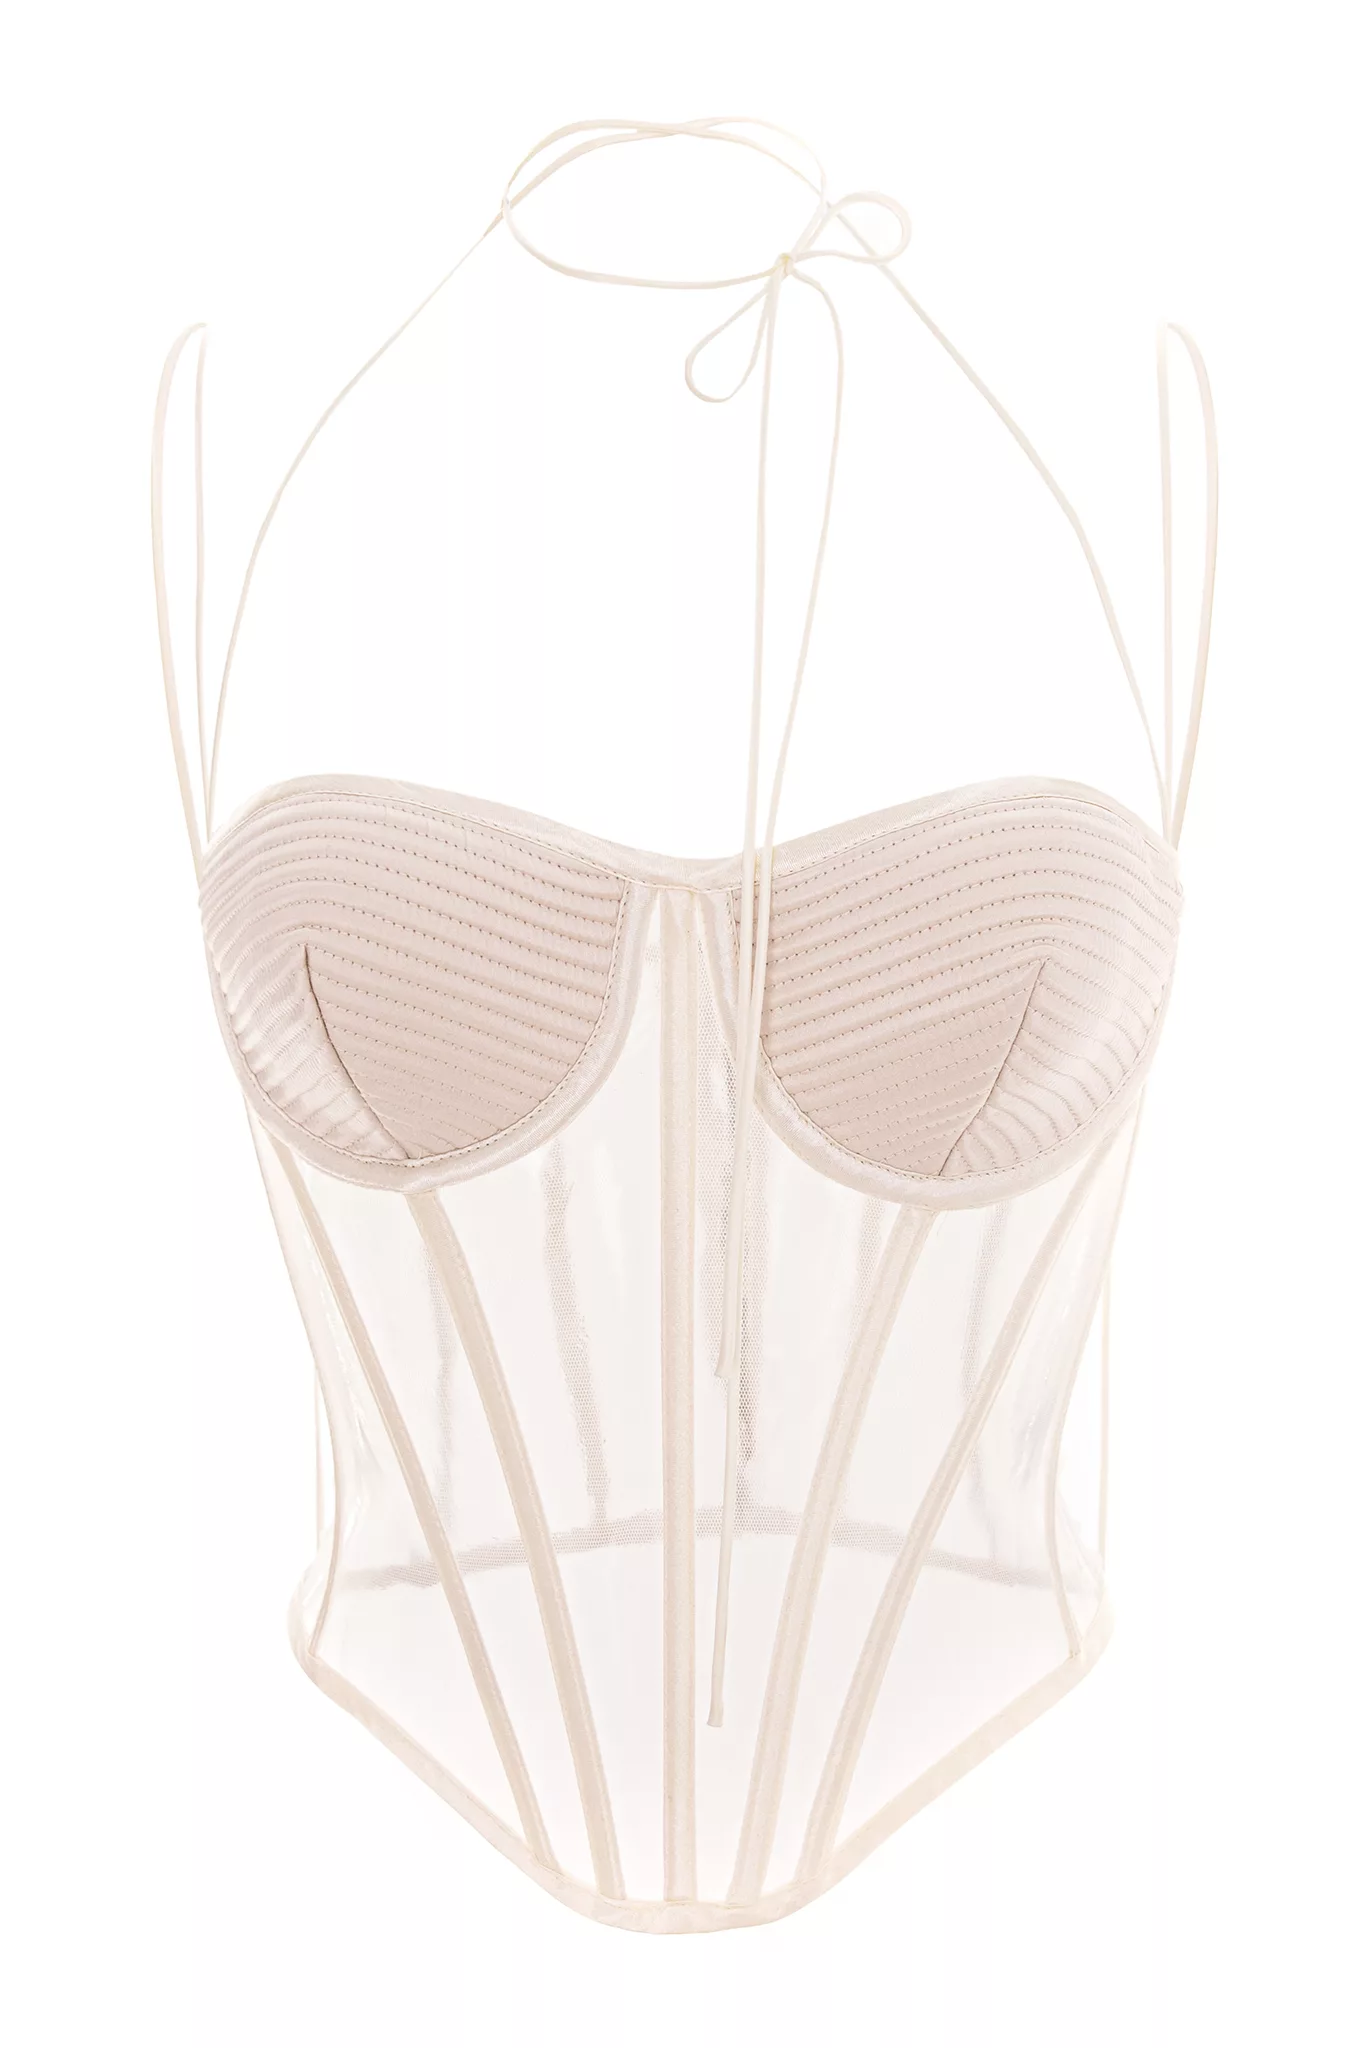 Venus Bustier - Silk Satin and Sheer Tulle Elegance